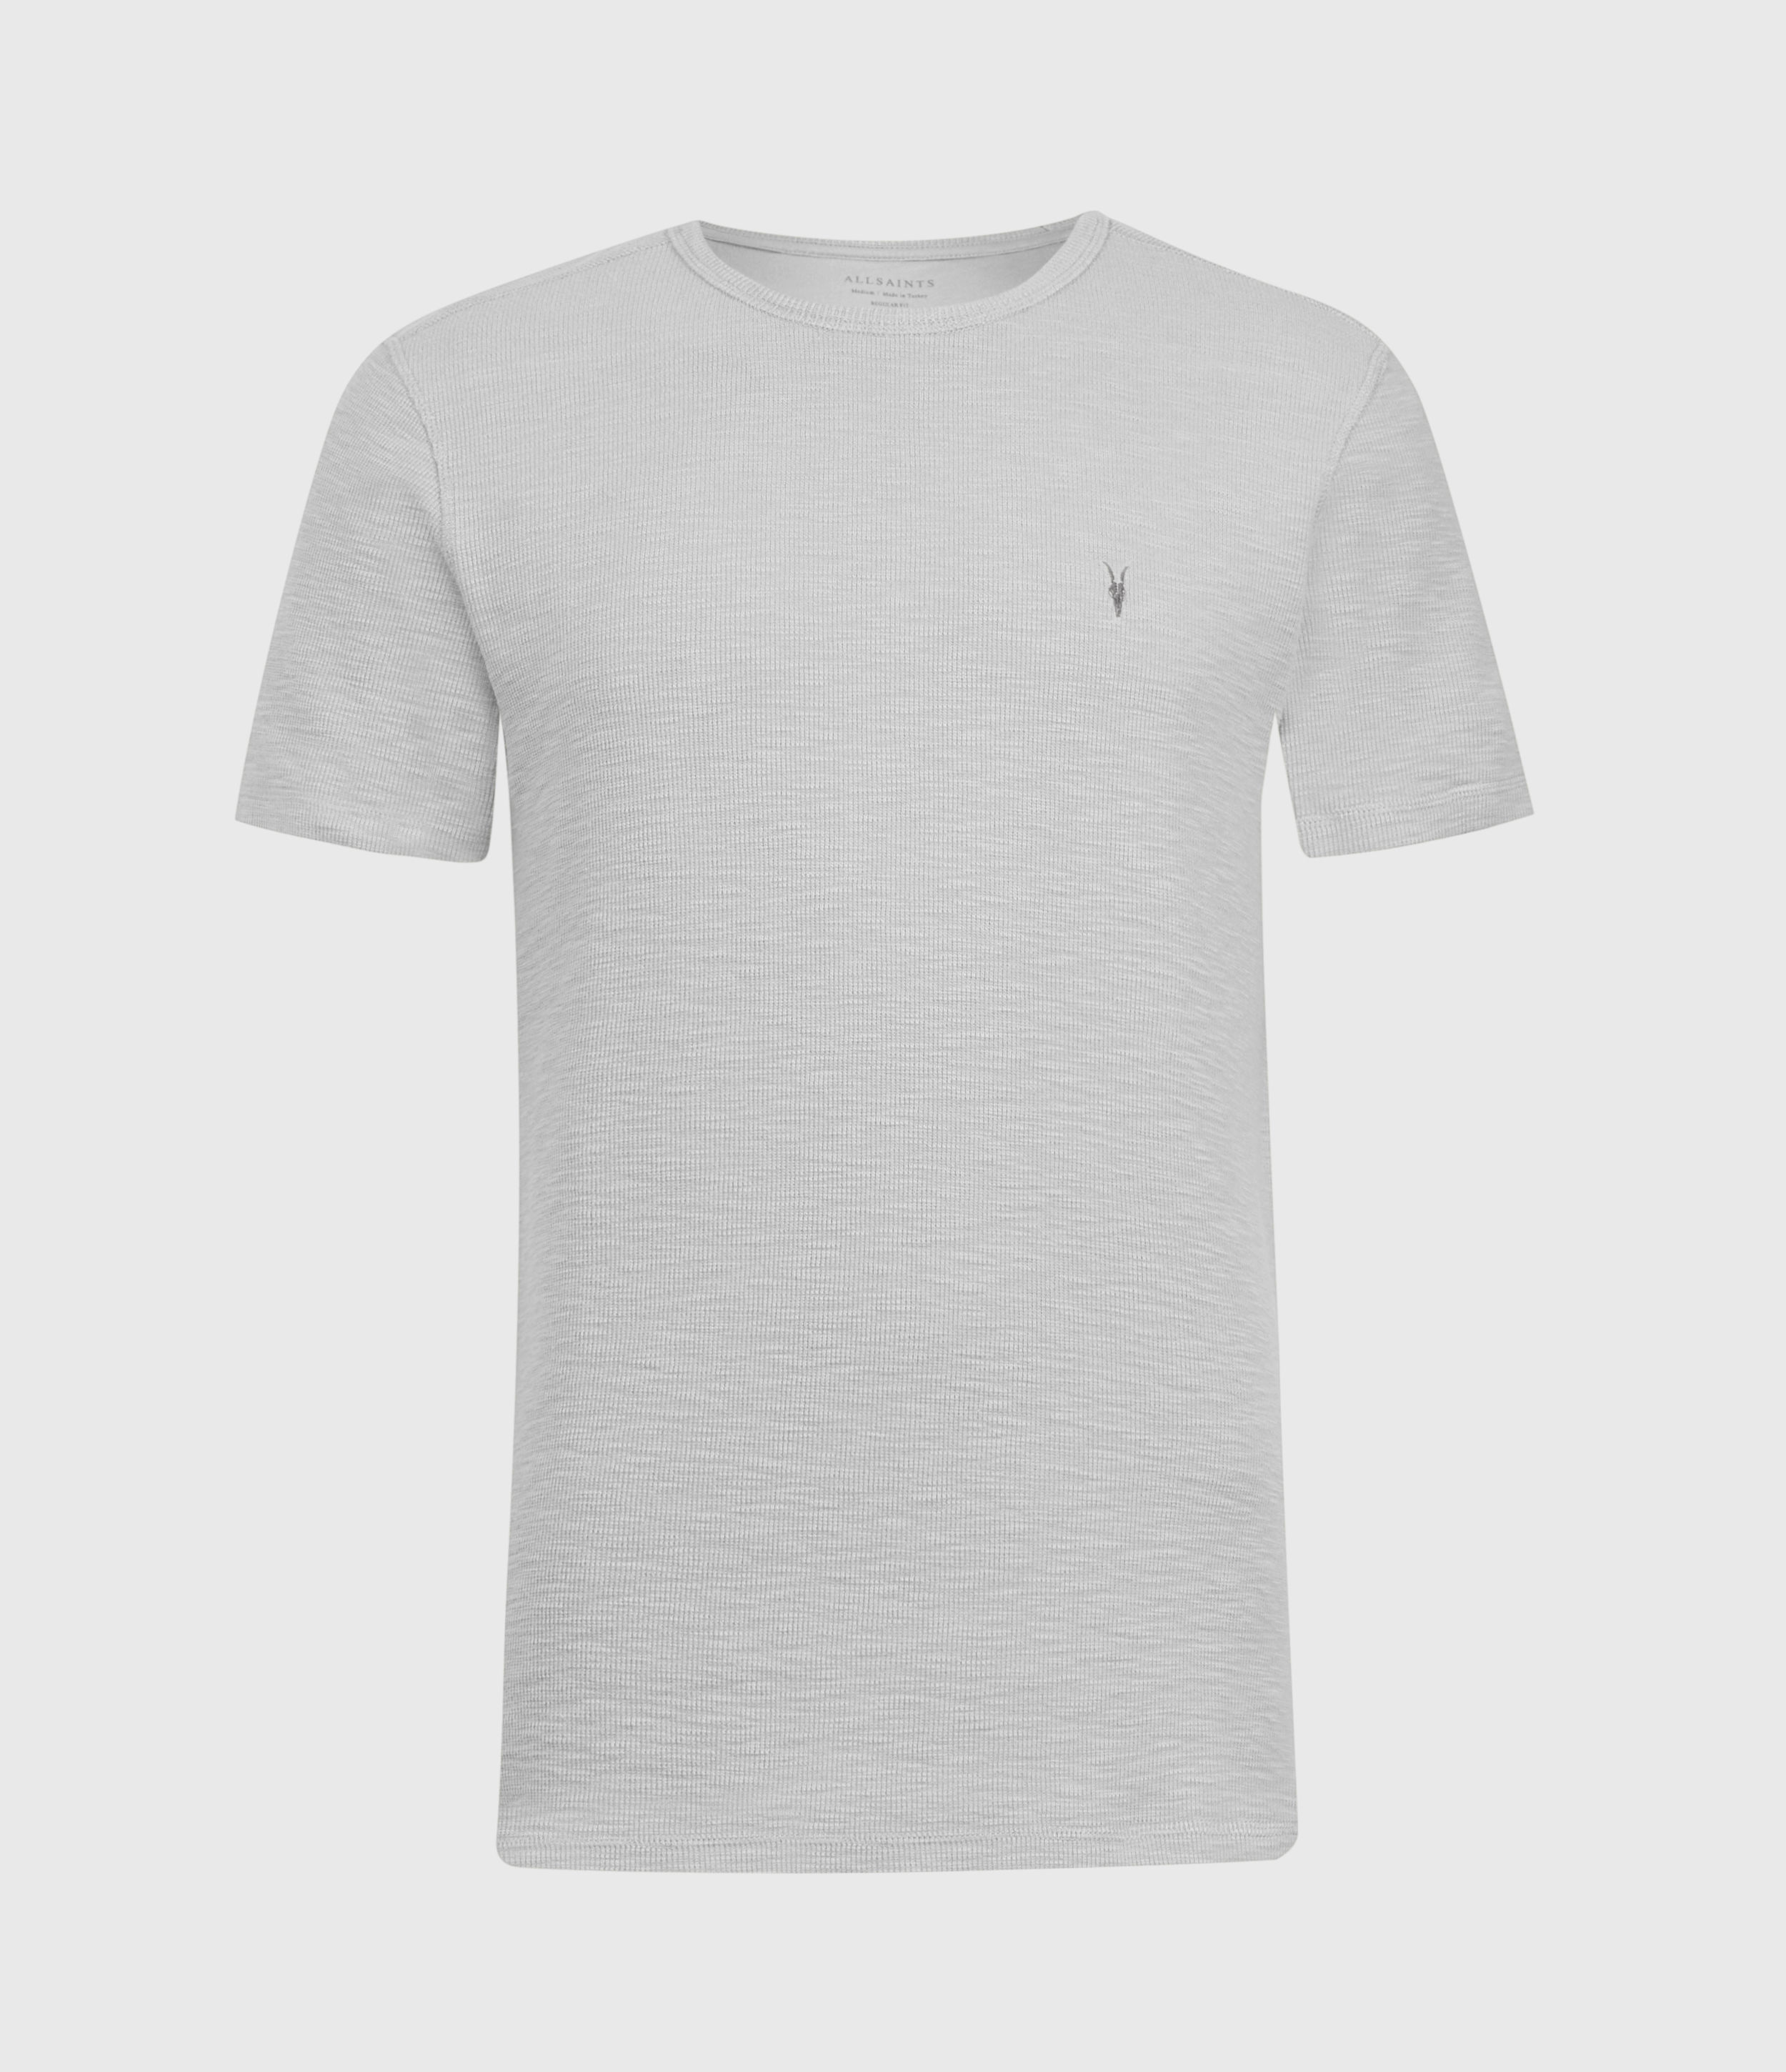 Allsaints Men's Muse Crew T-shirt In Zinc Grey